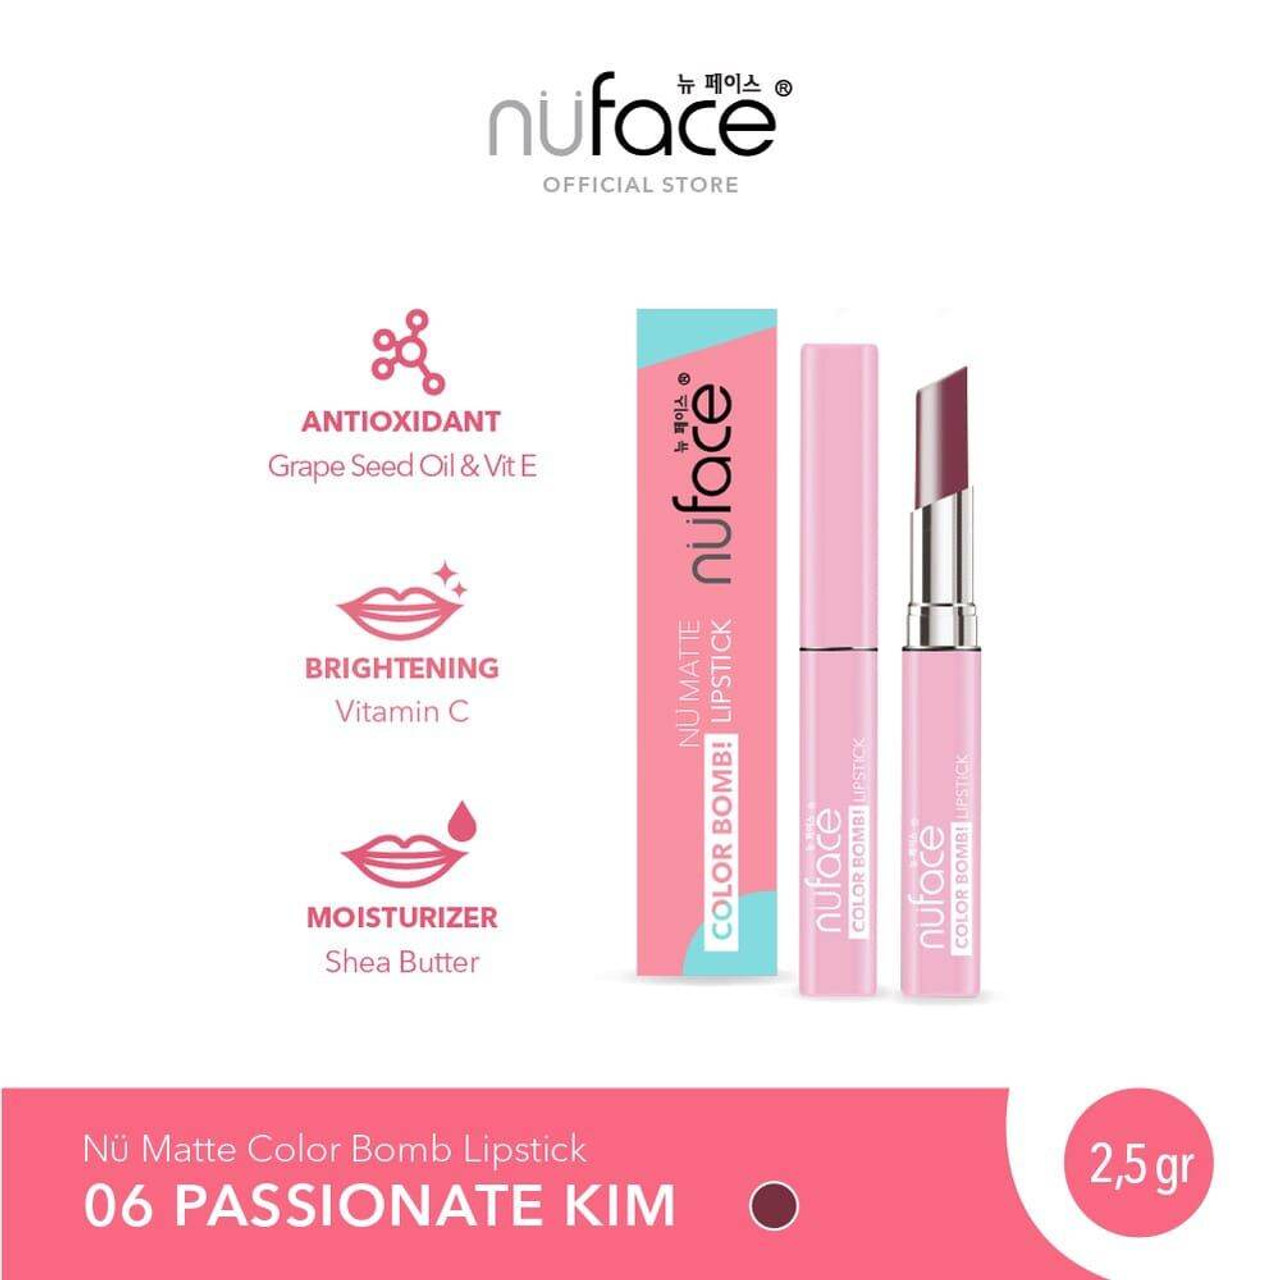 Nuface Nu Matte Color Bomb Lipstick Passionate Kim, 2.5gr